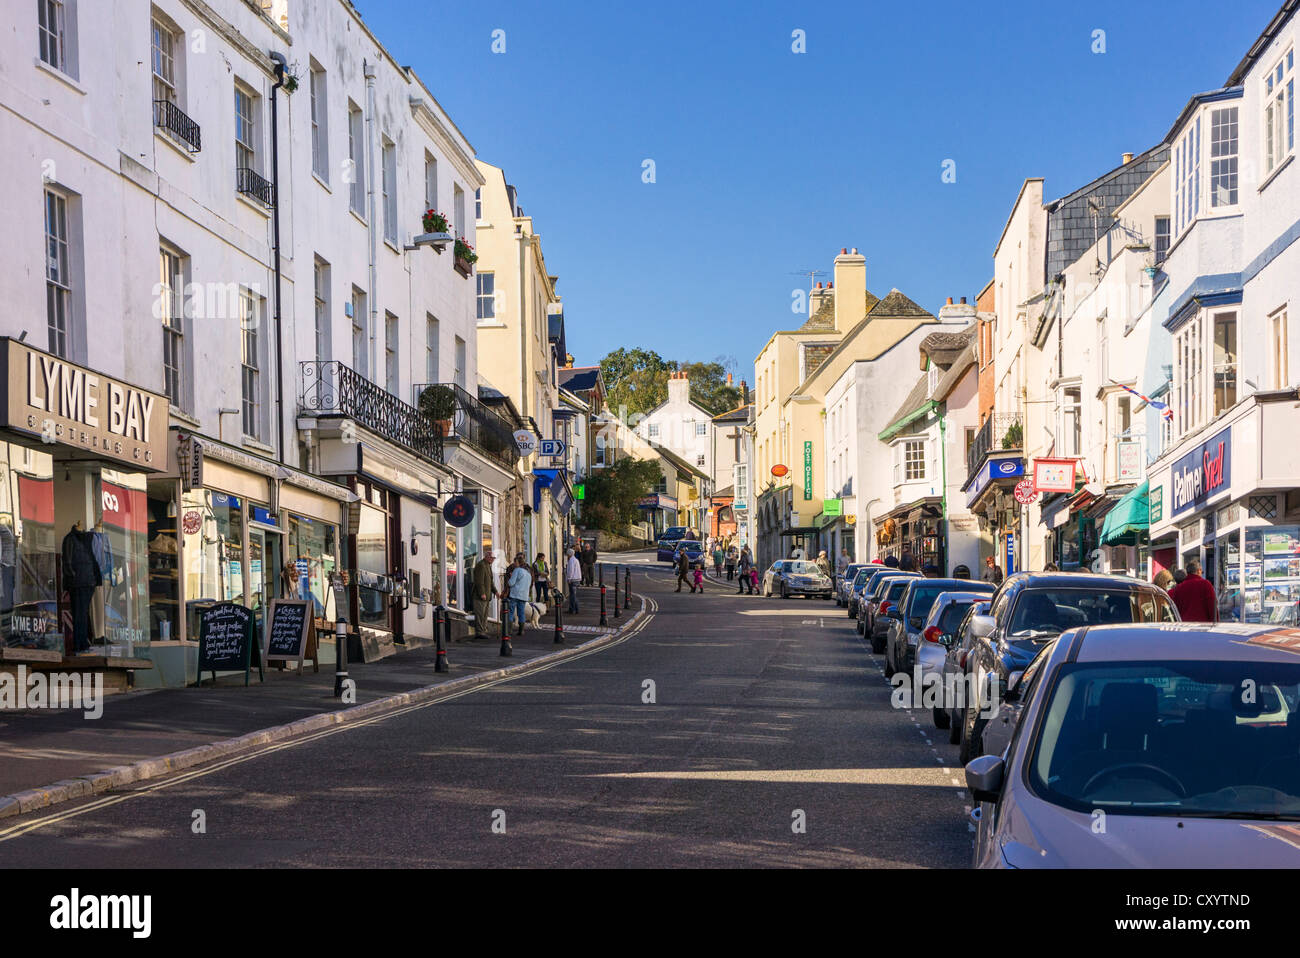 Lyme Regis, Dorset, UK - street scene in the town centre Stock Photo